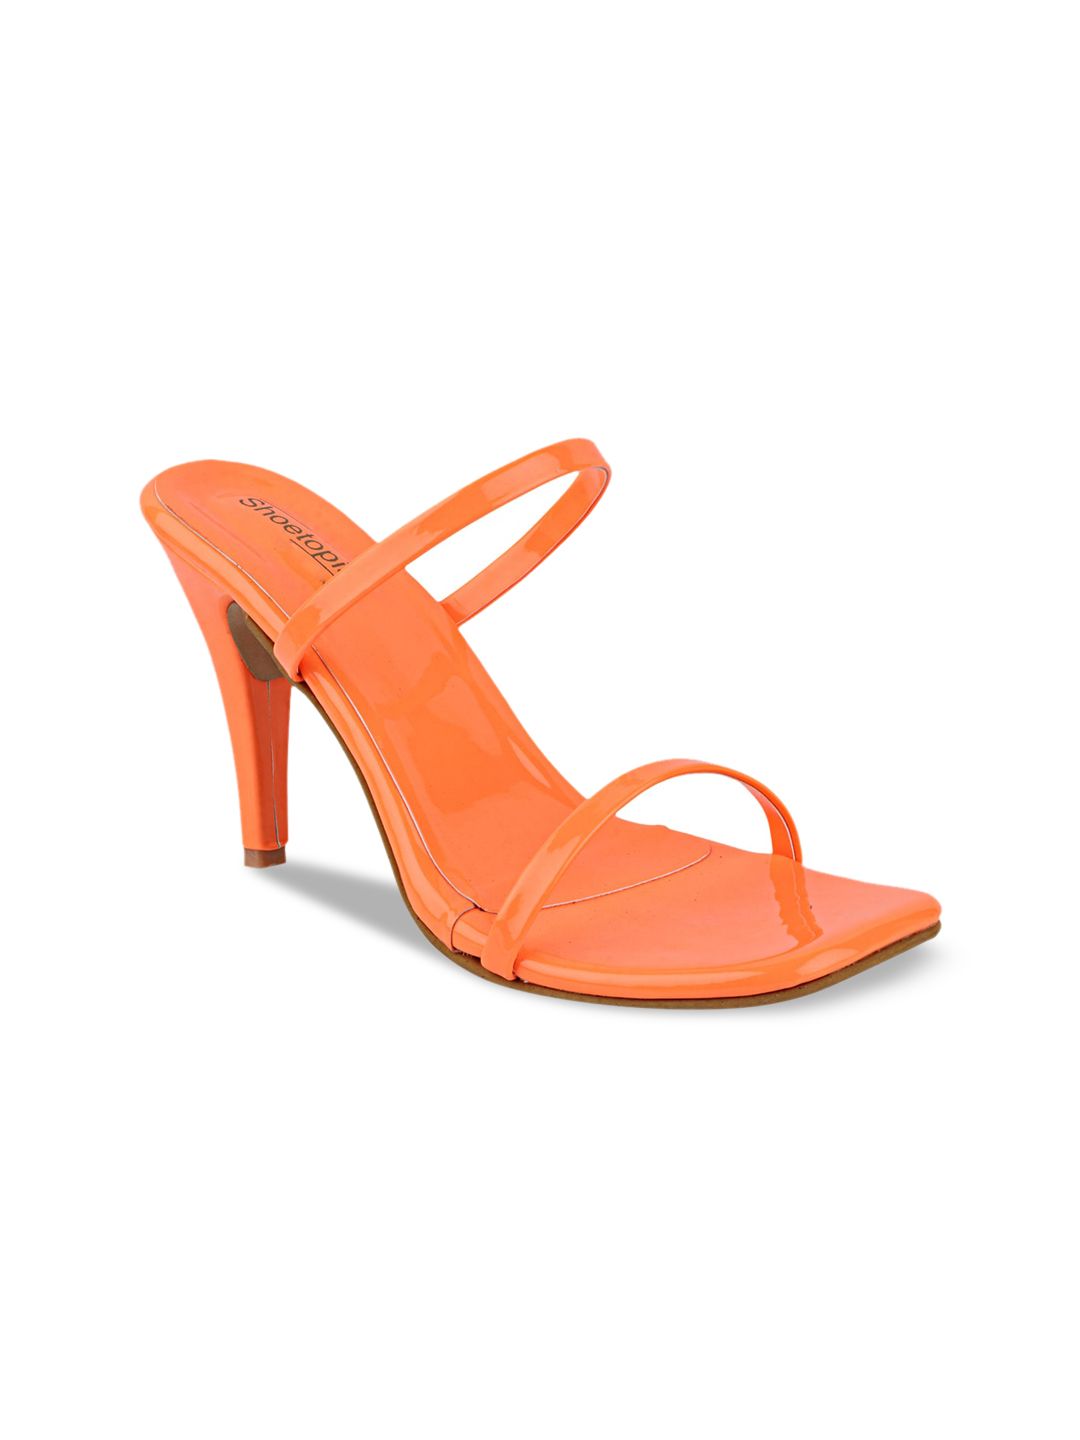 Shoetopia Orange Stiletto Sandals Price in India